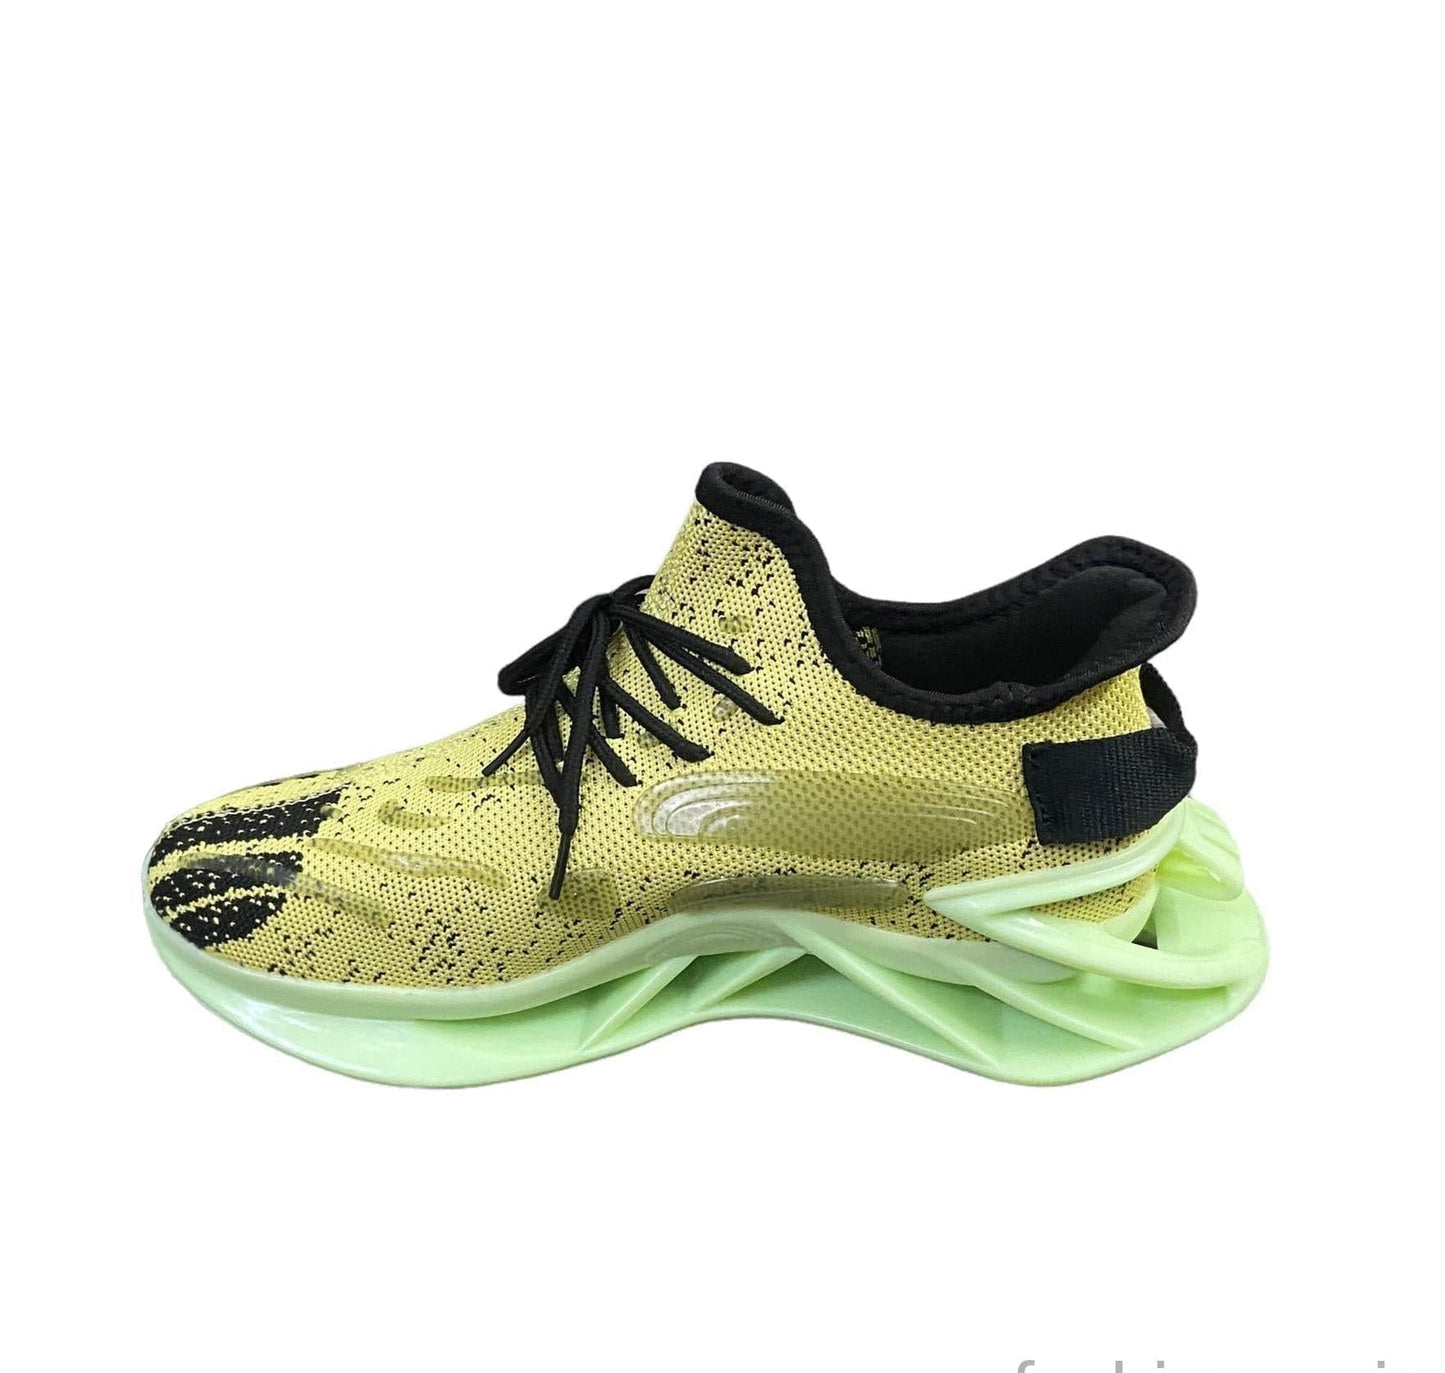 "Radium light Green" trail mesh athletic trainer sneaker shoes fashionray.in